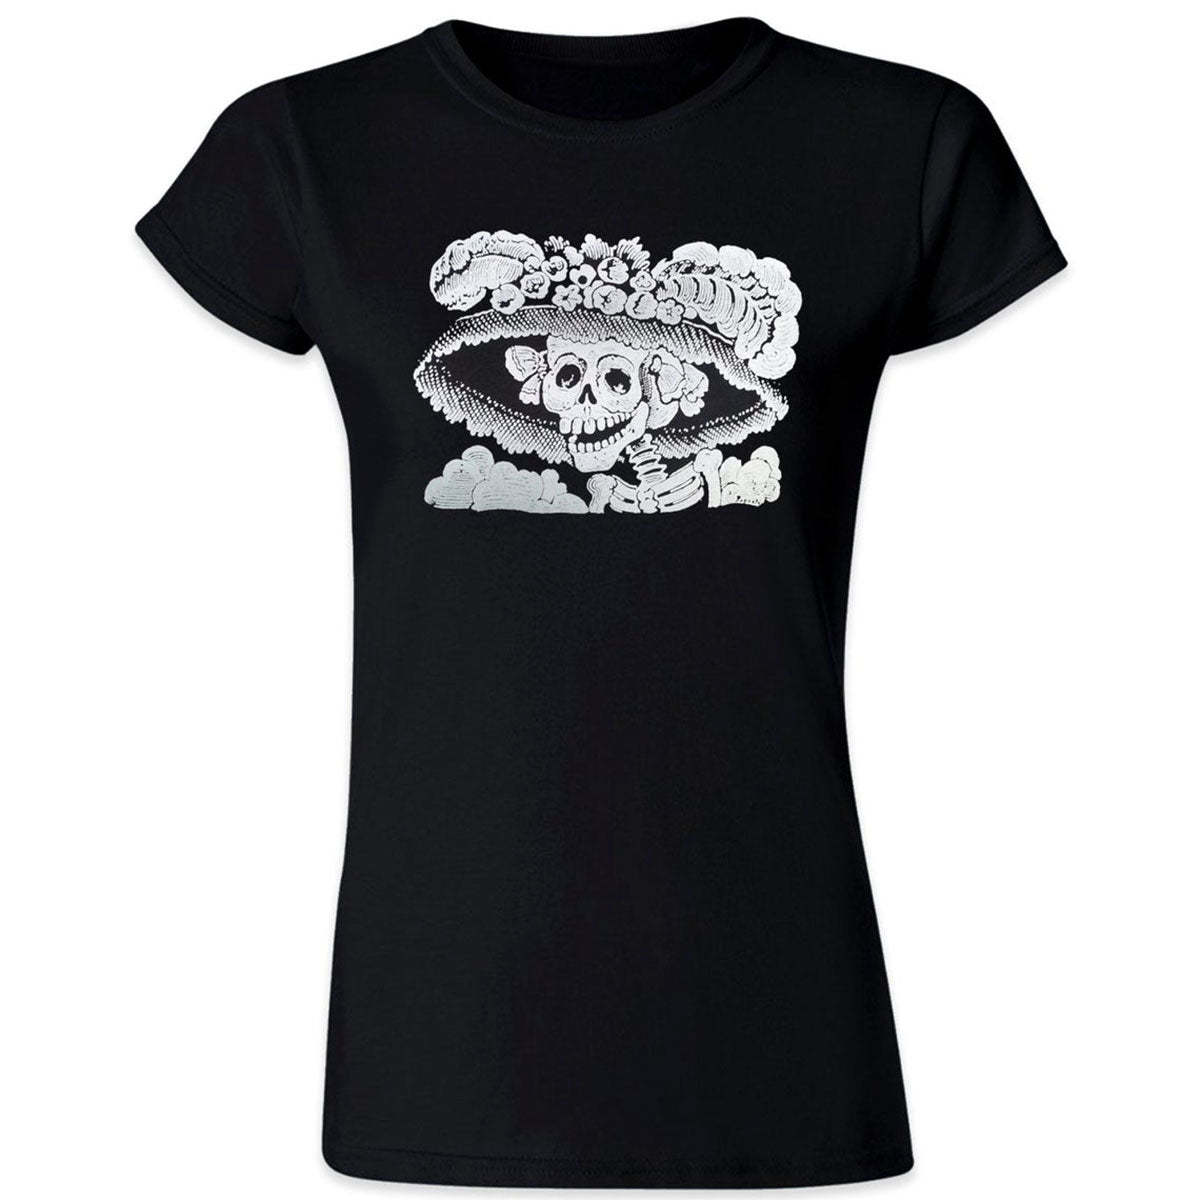 Women’s Day of the Dead, La Calavera Catrina T Shirt, Dapper Skeleton, Black Shirt by Casita De Los Muertos